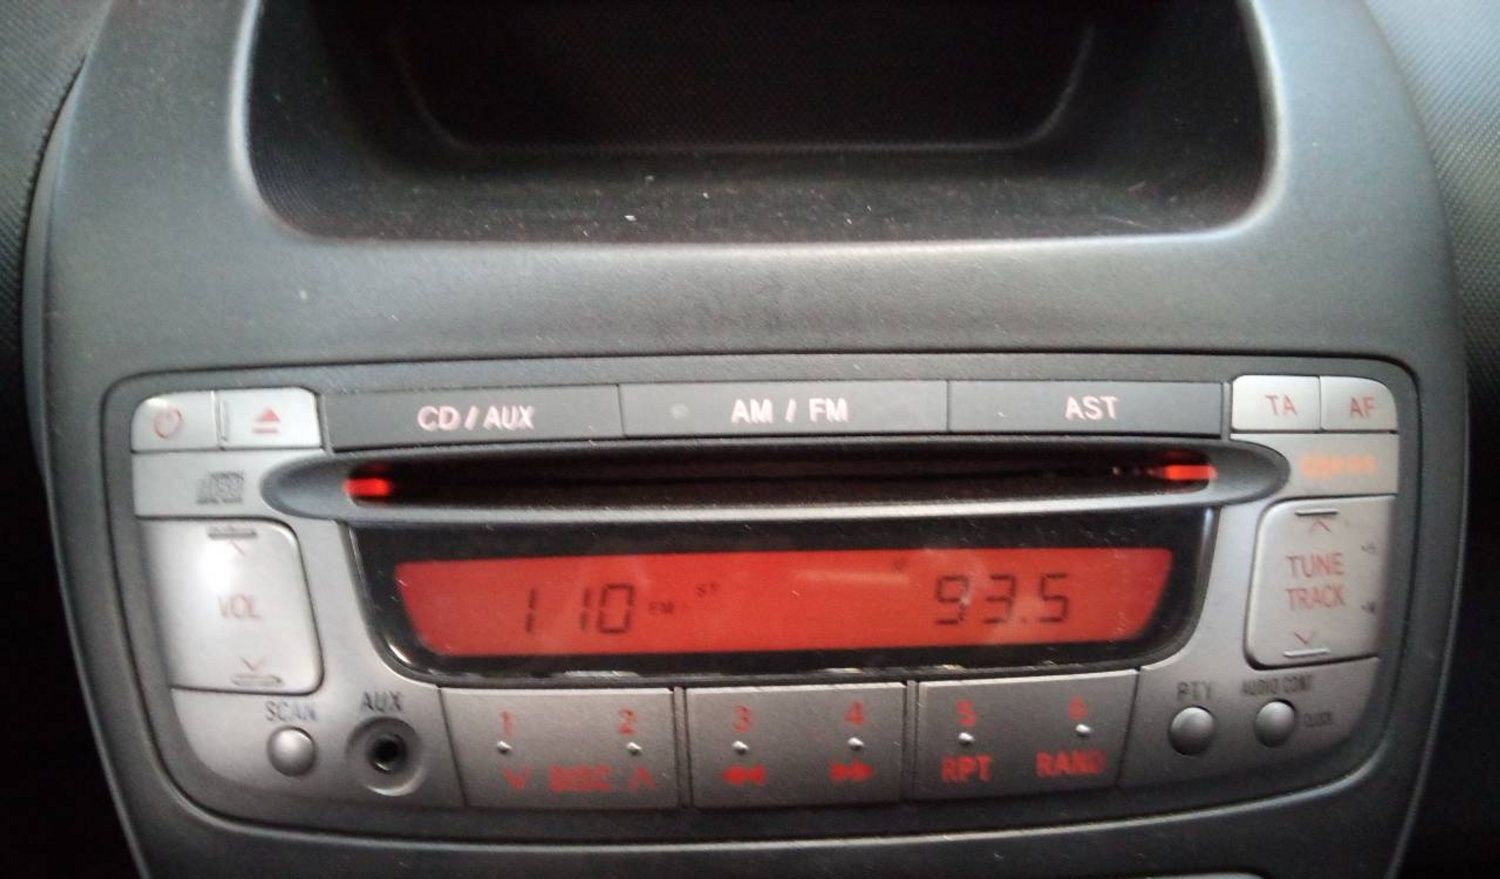 Auto Rádio Original + moldura - TOYOTA AYGO / PEUGEOT 107 / CITROEN C1